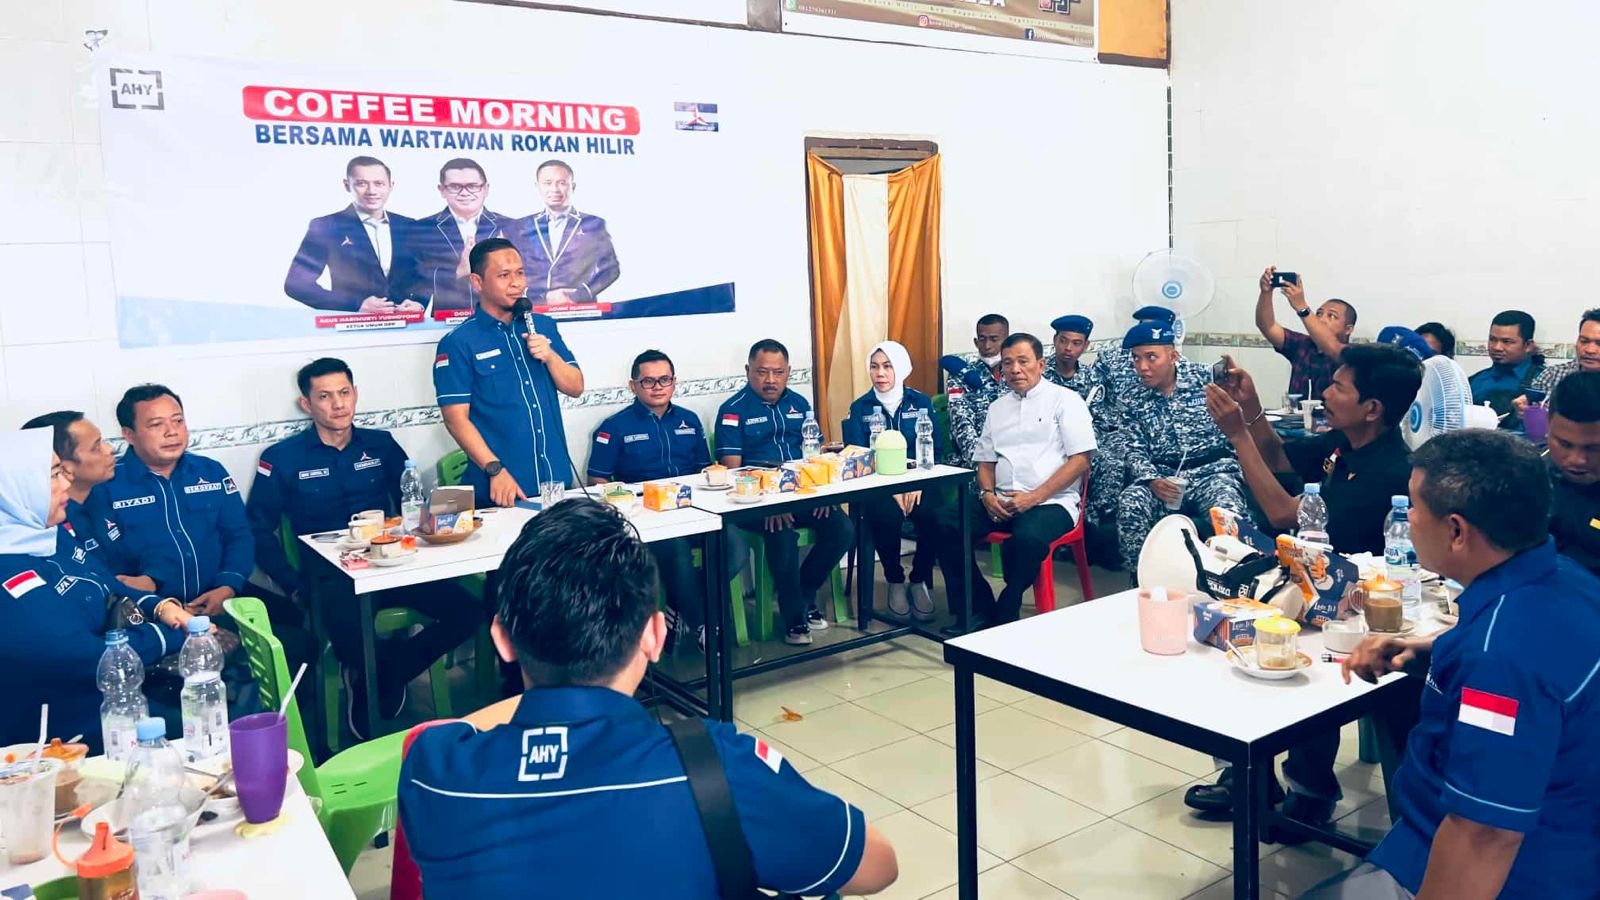 Ketua Demokrat Riau Coffe Morning Bersama Wartawan di Rohil, Agung Nugroho: Kita Kerja Nyata